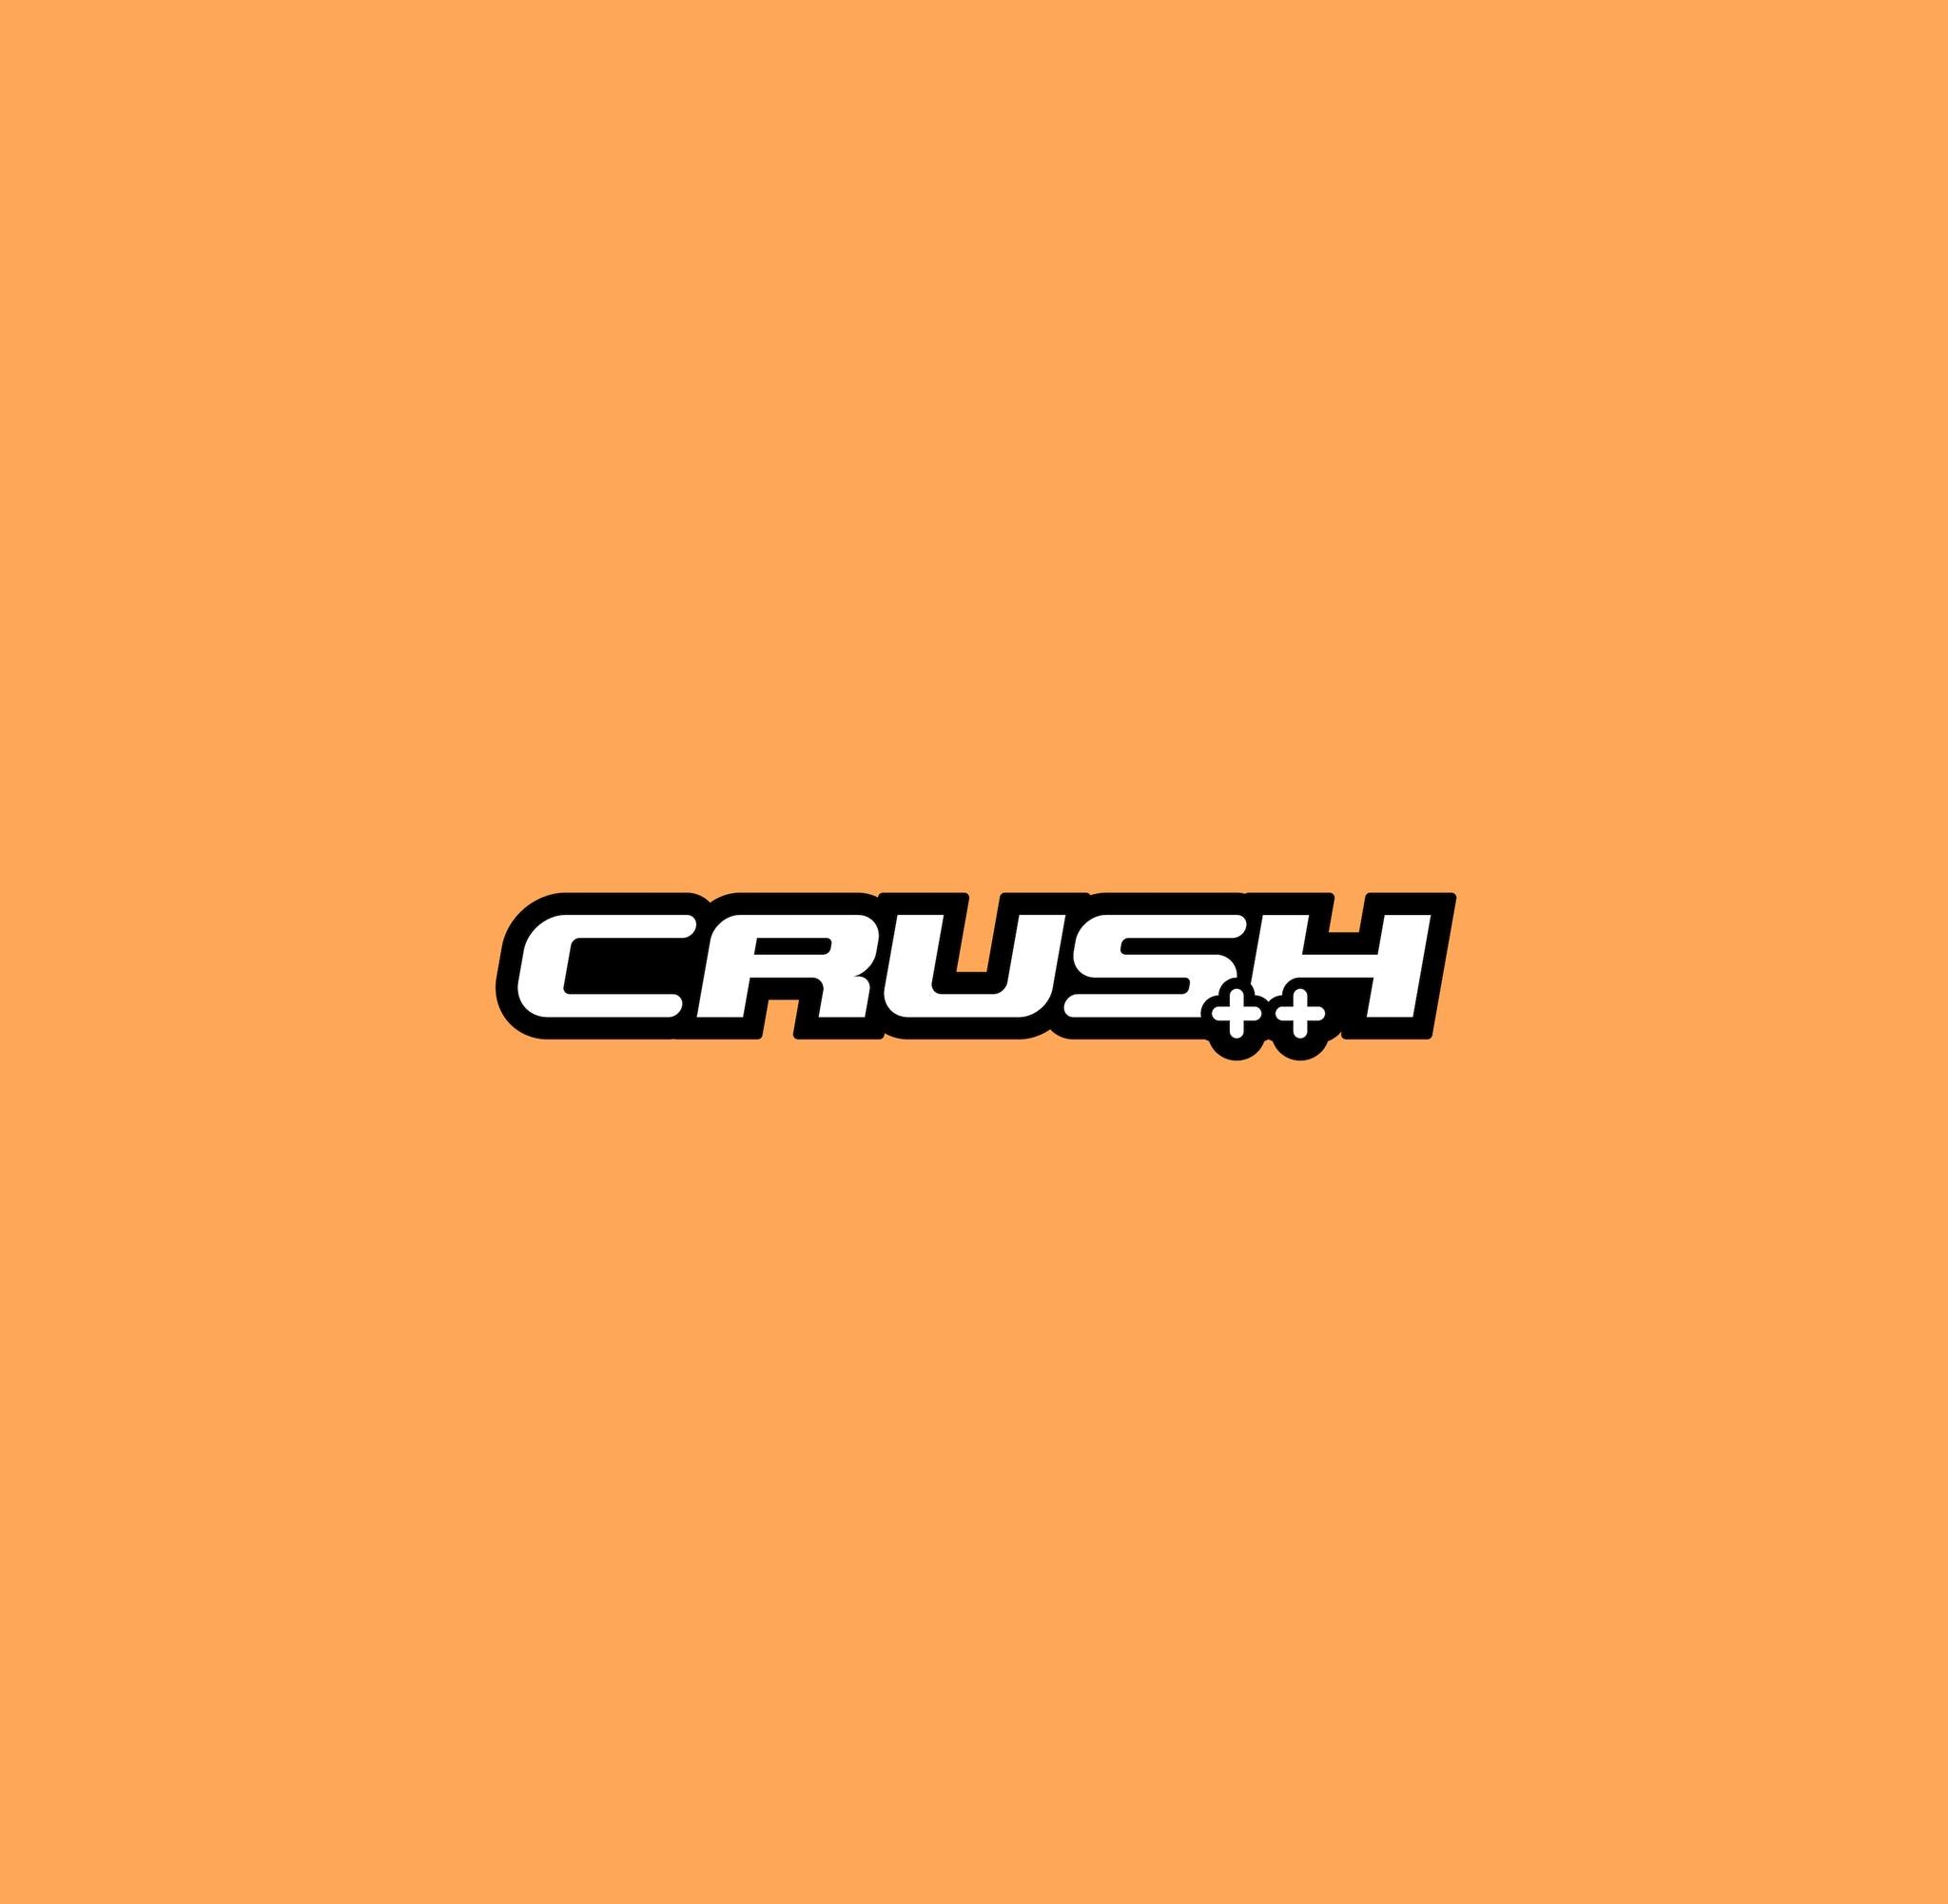 Crush++ — Just Watching Movies cover artwork